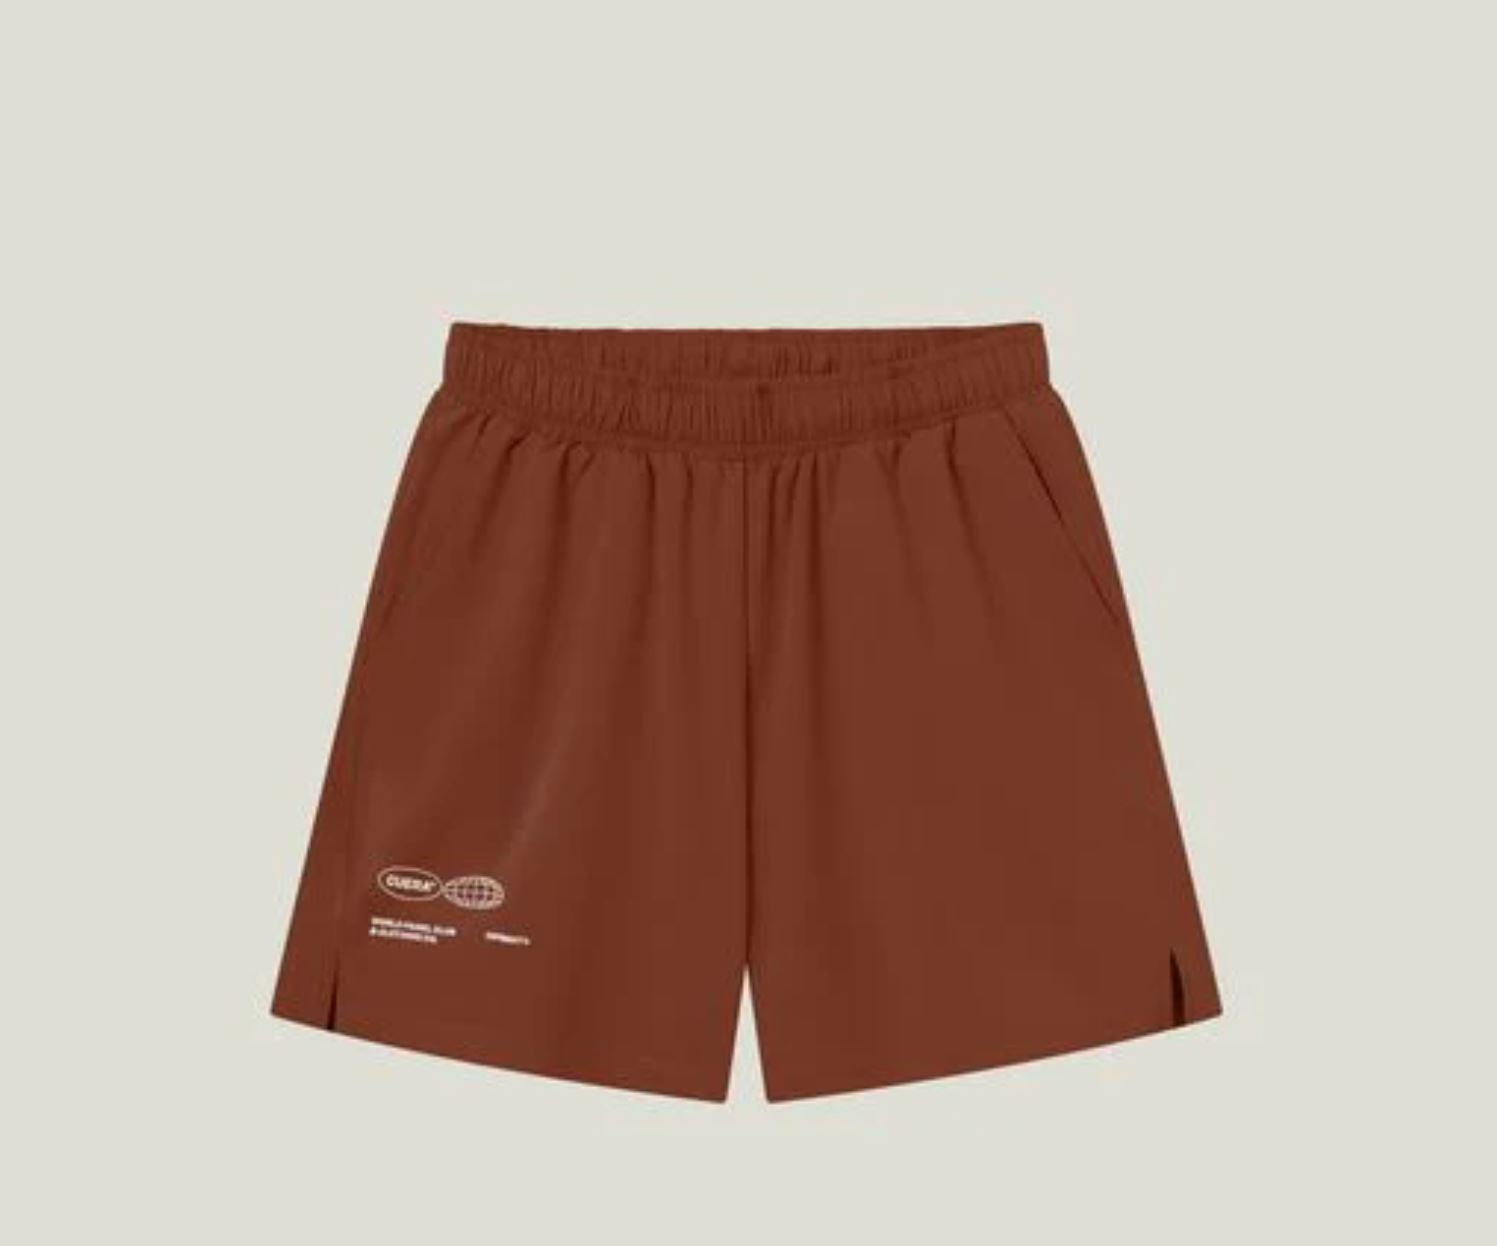 Cuera Active Globe Shorts (Espresso) - XL